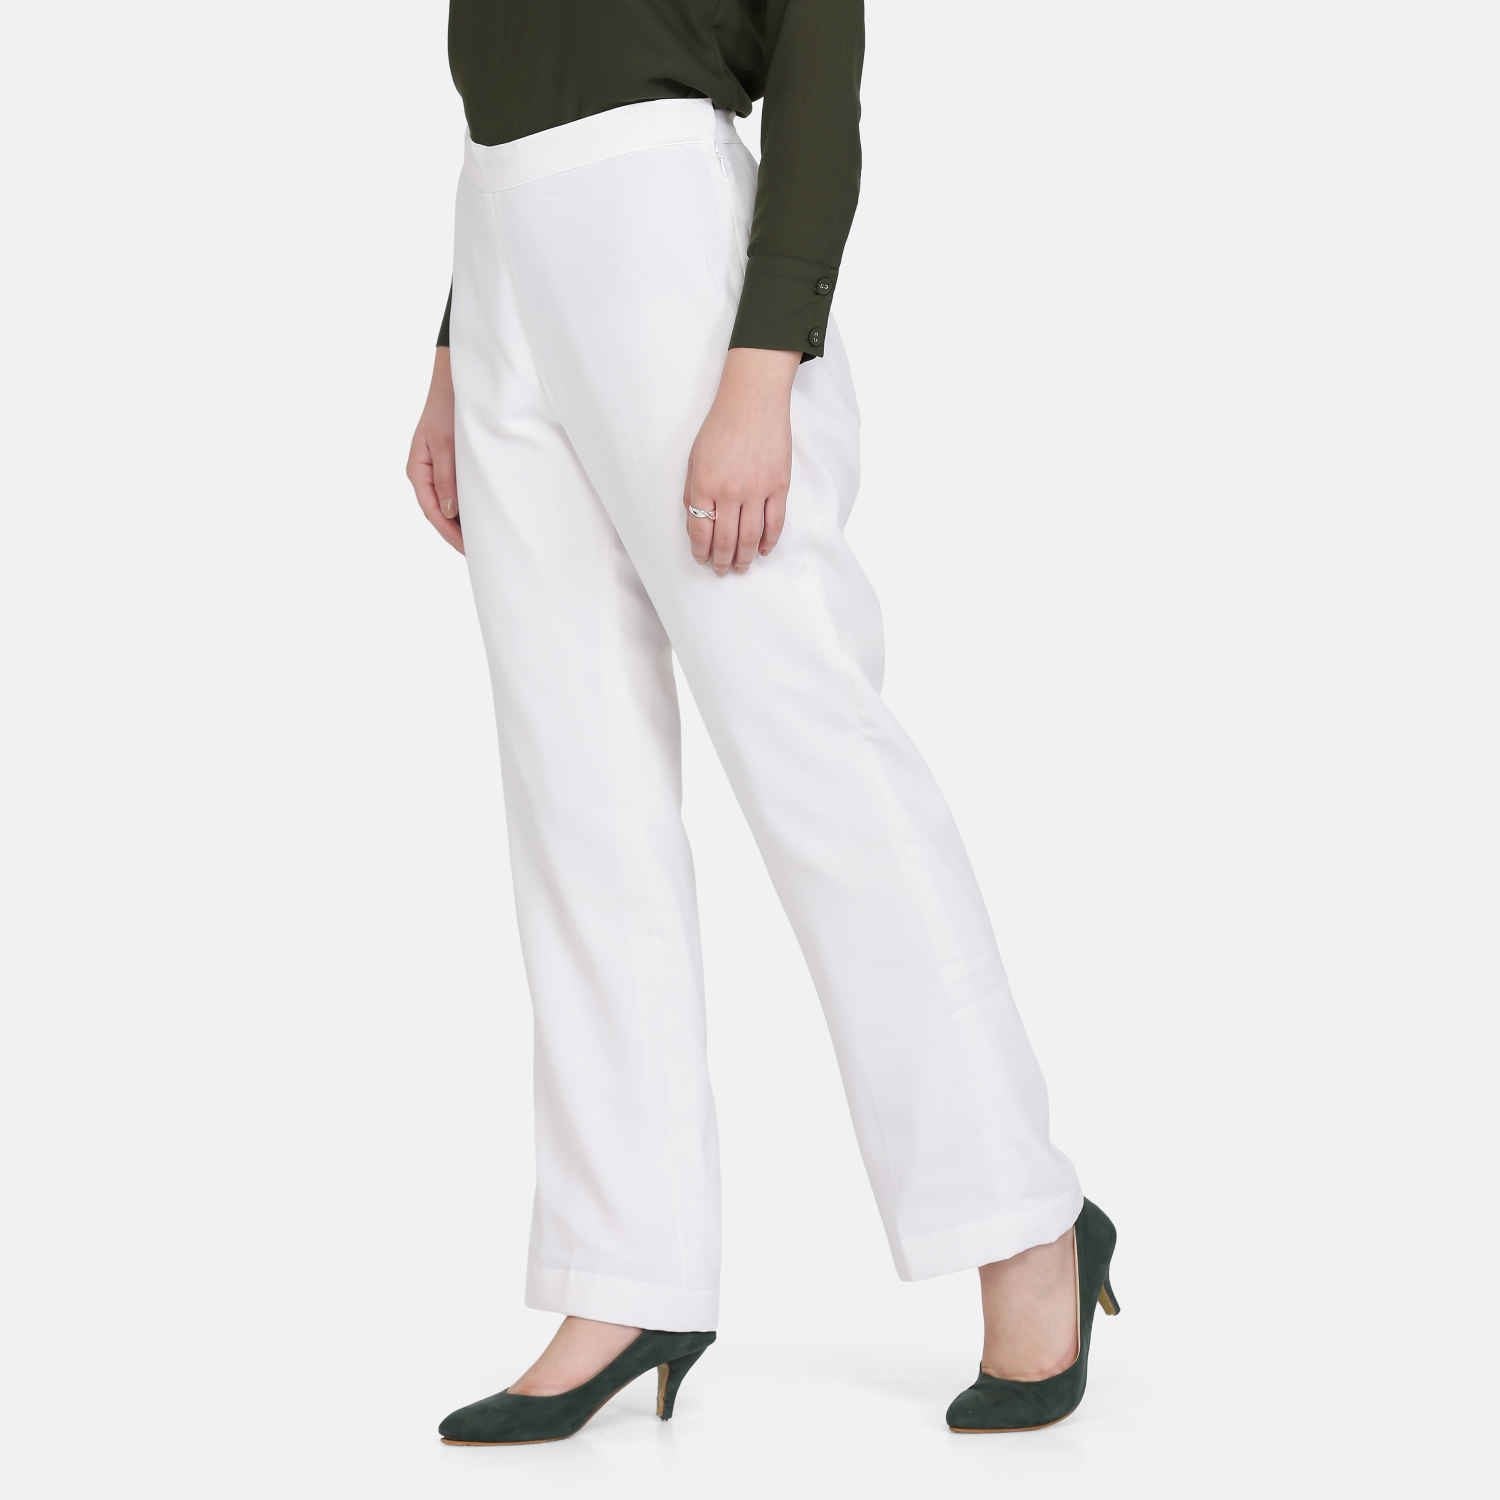 Jennifer Lopez's $980 White Pants Look Similar to These $40 Pants